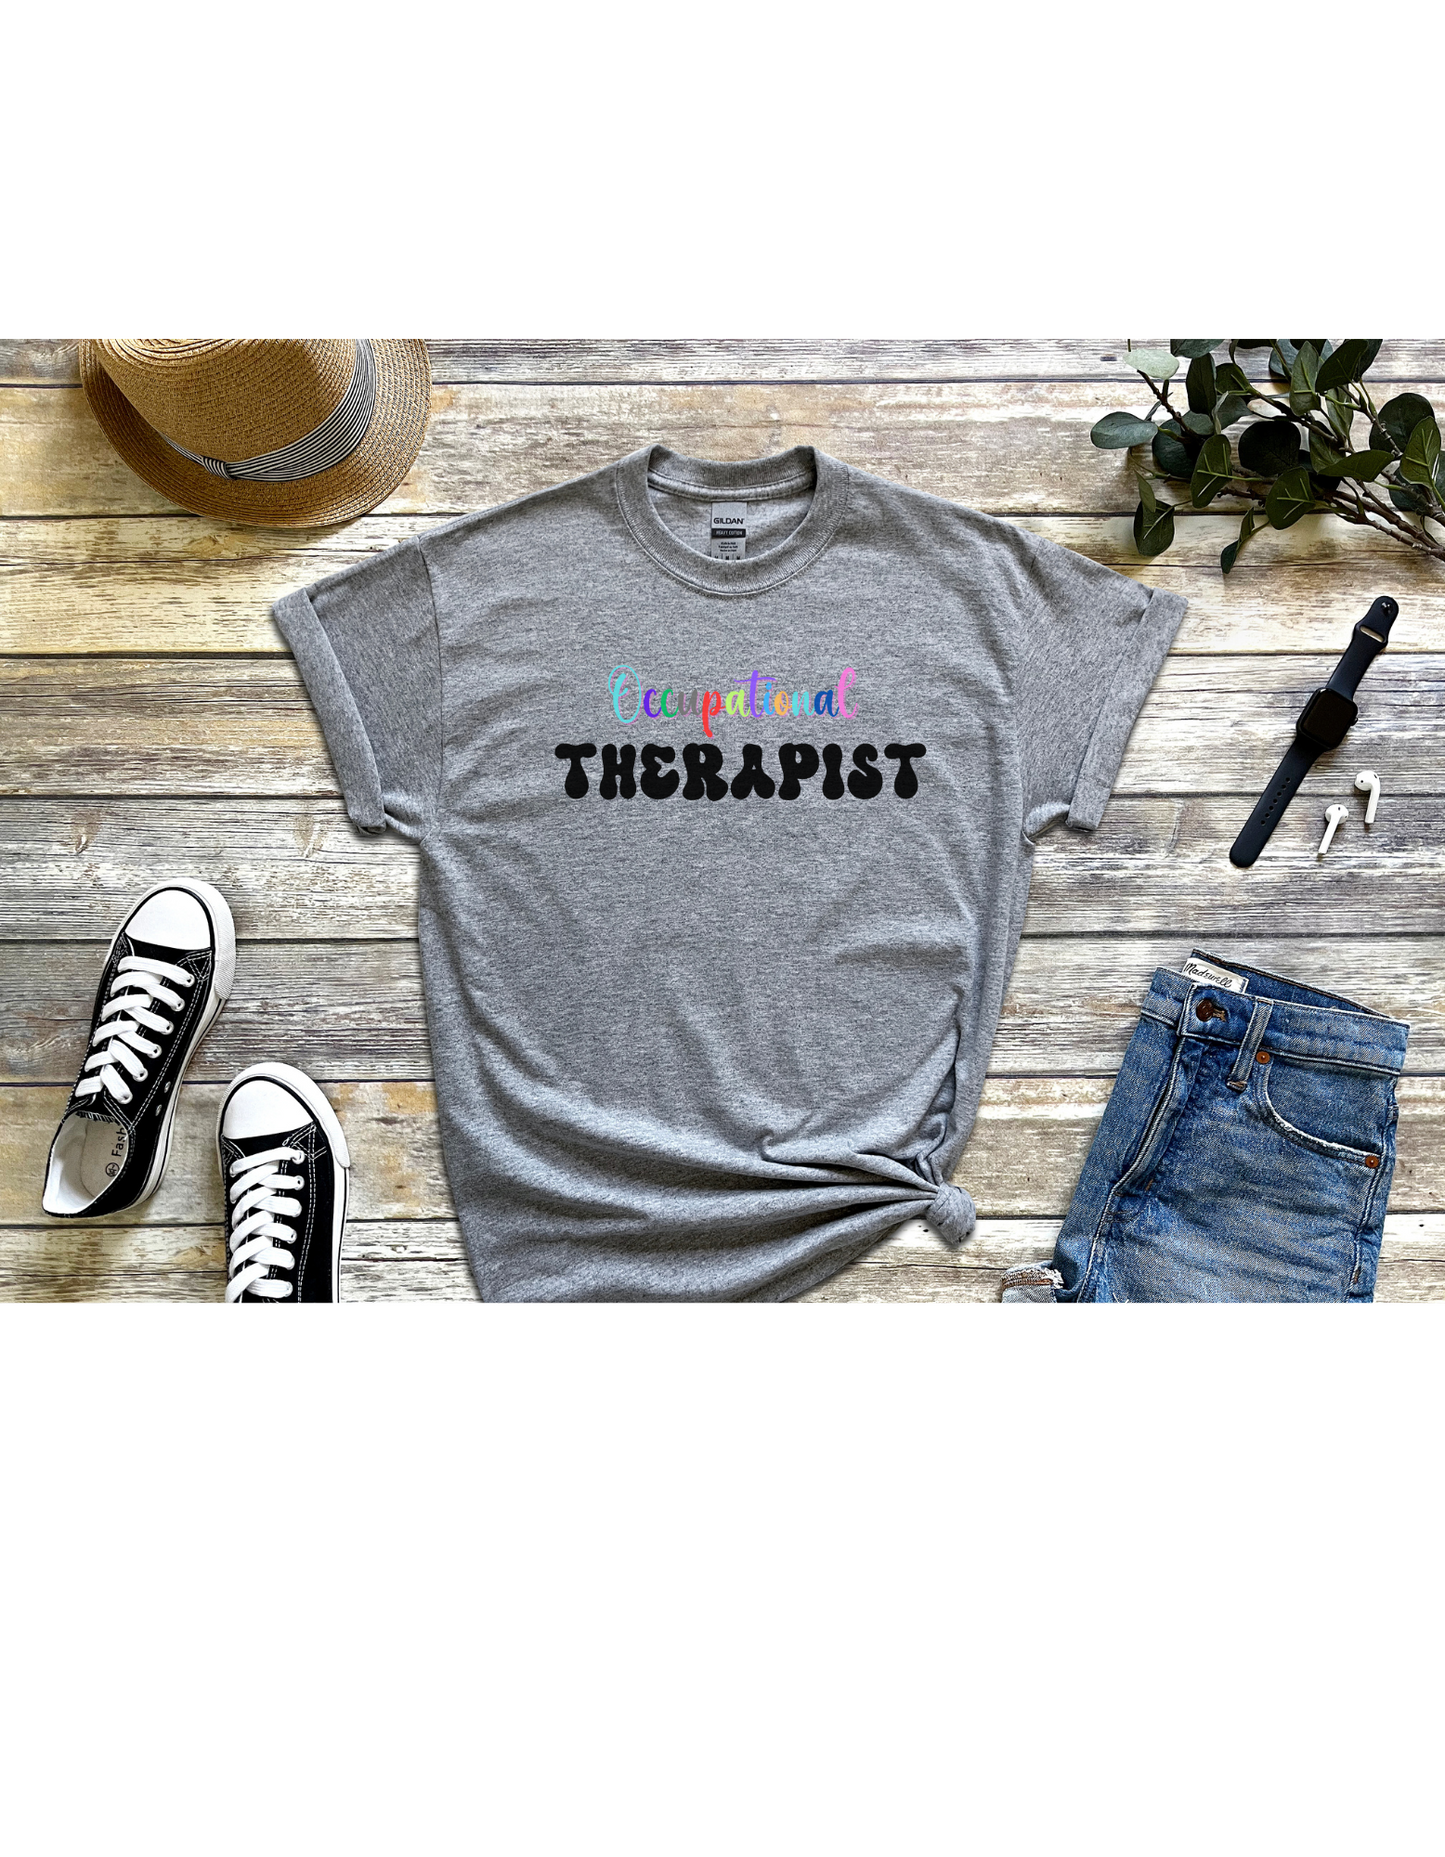 Occupational Therapist T-Shirt, OT Gift, Occupational Therapy Shirt, Gift for OT, Therapy Tee